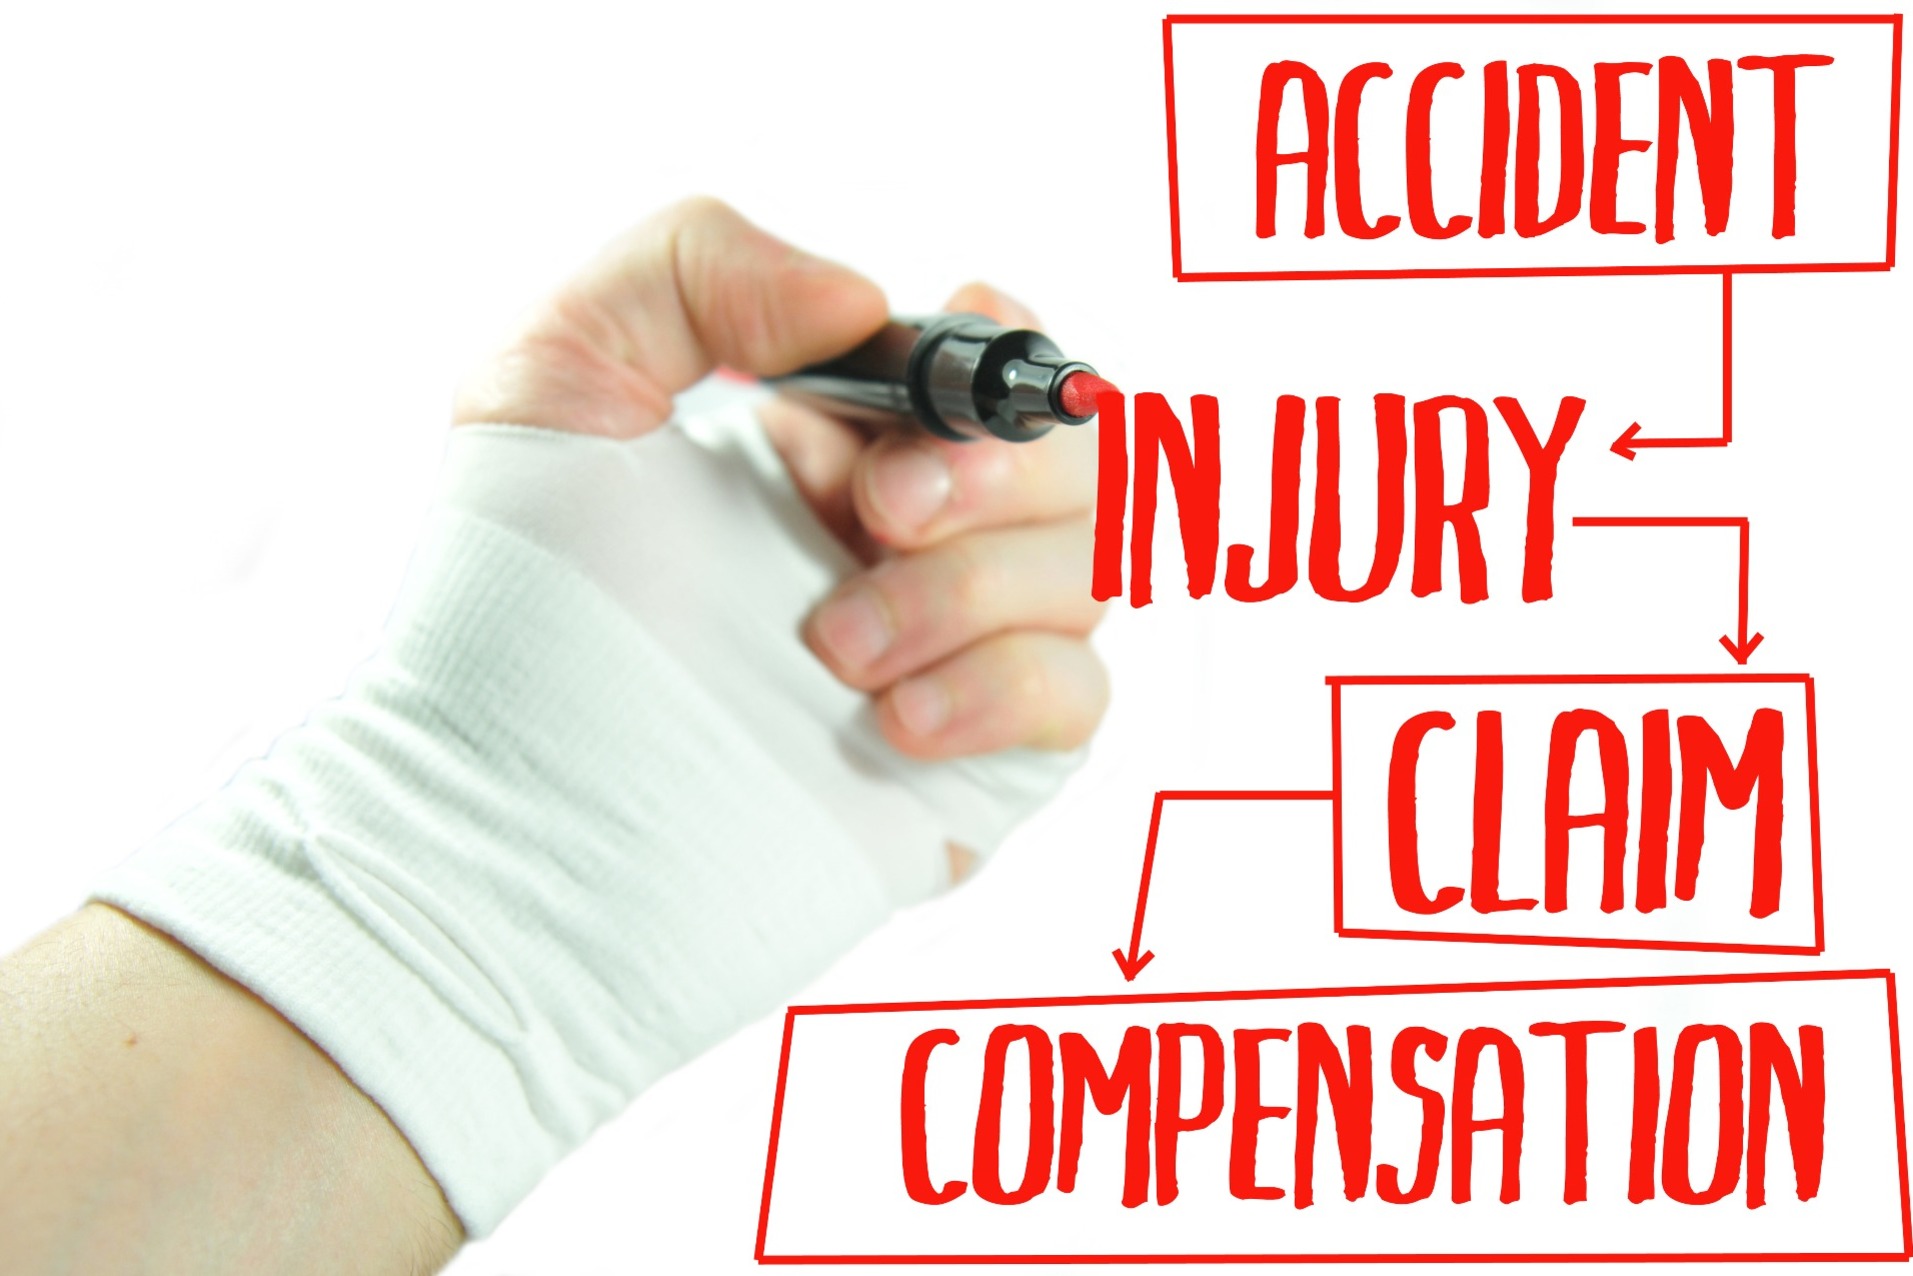 Accident - Injury - Claim - Compensation